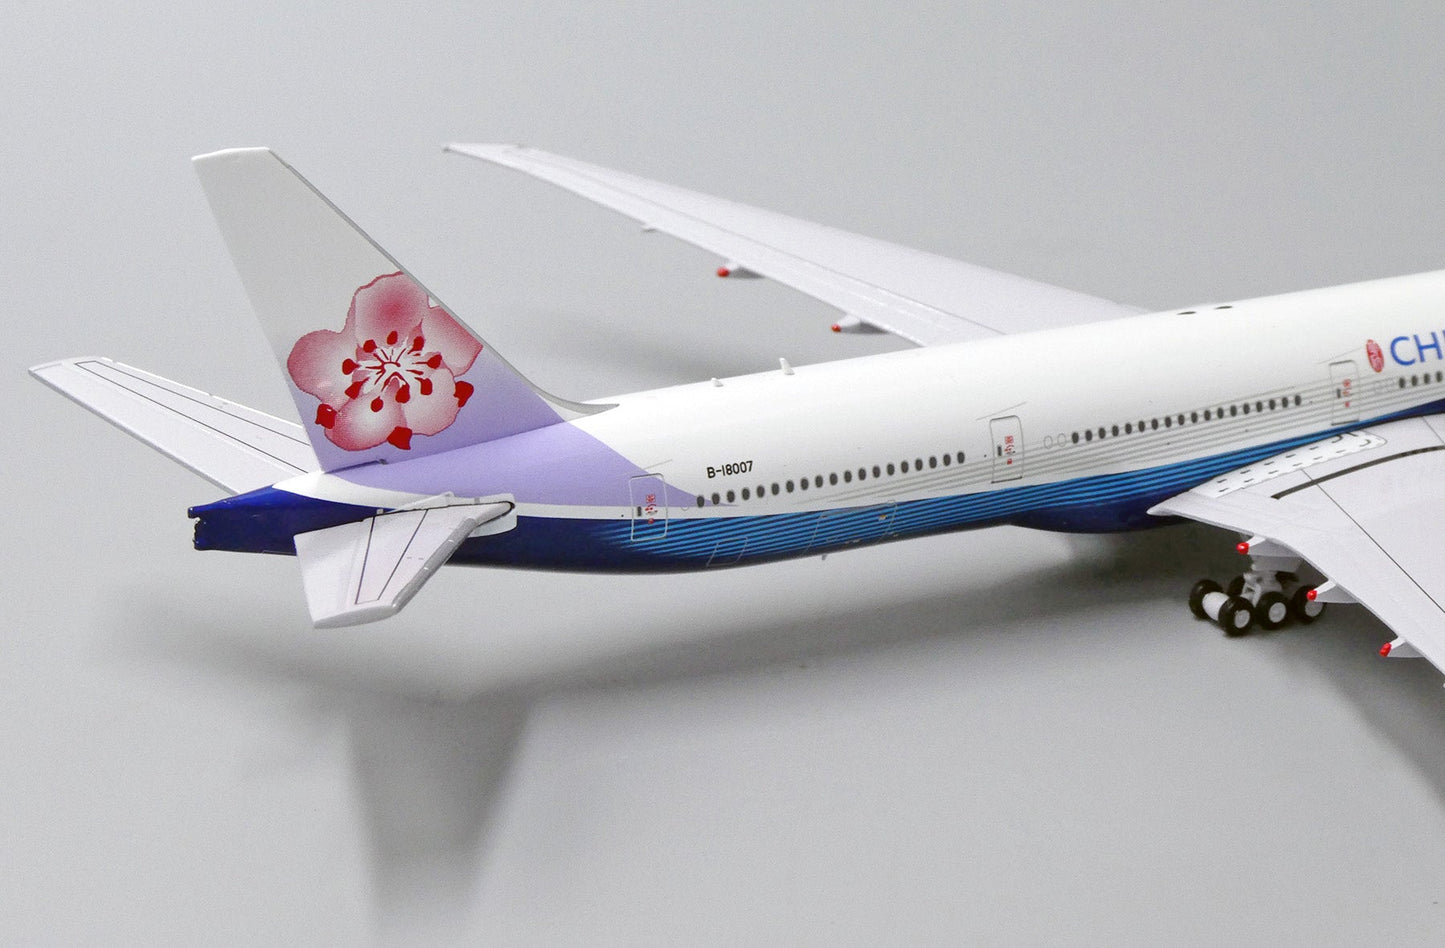 1/400 China Airlines B 777-300ER "Dreamliner" JC Wings EW477W006s/d1 *Defective model*